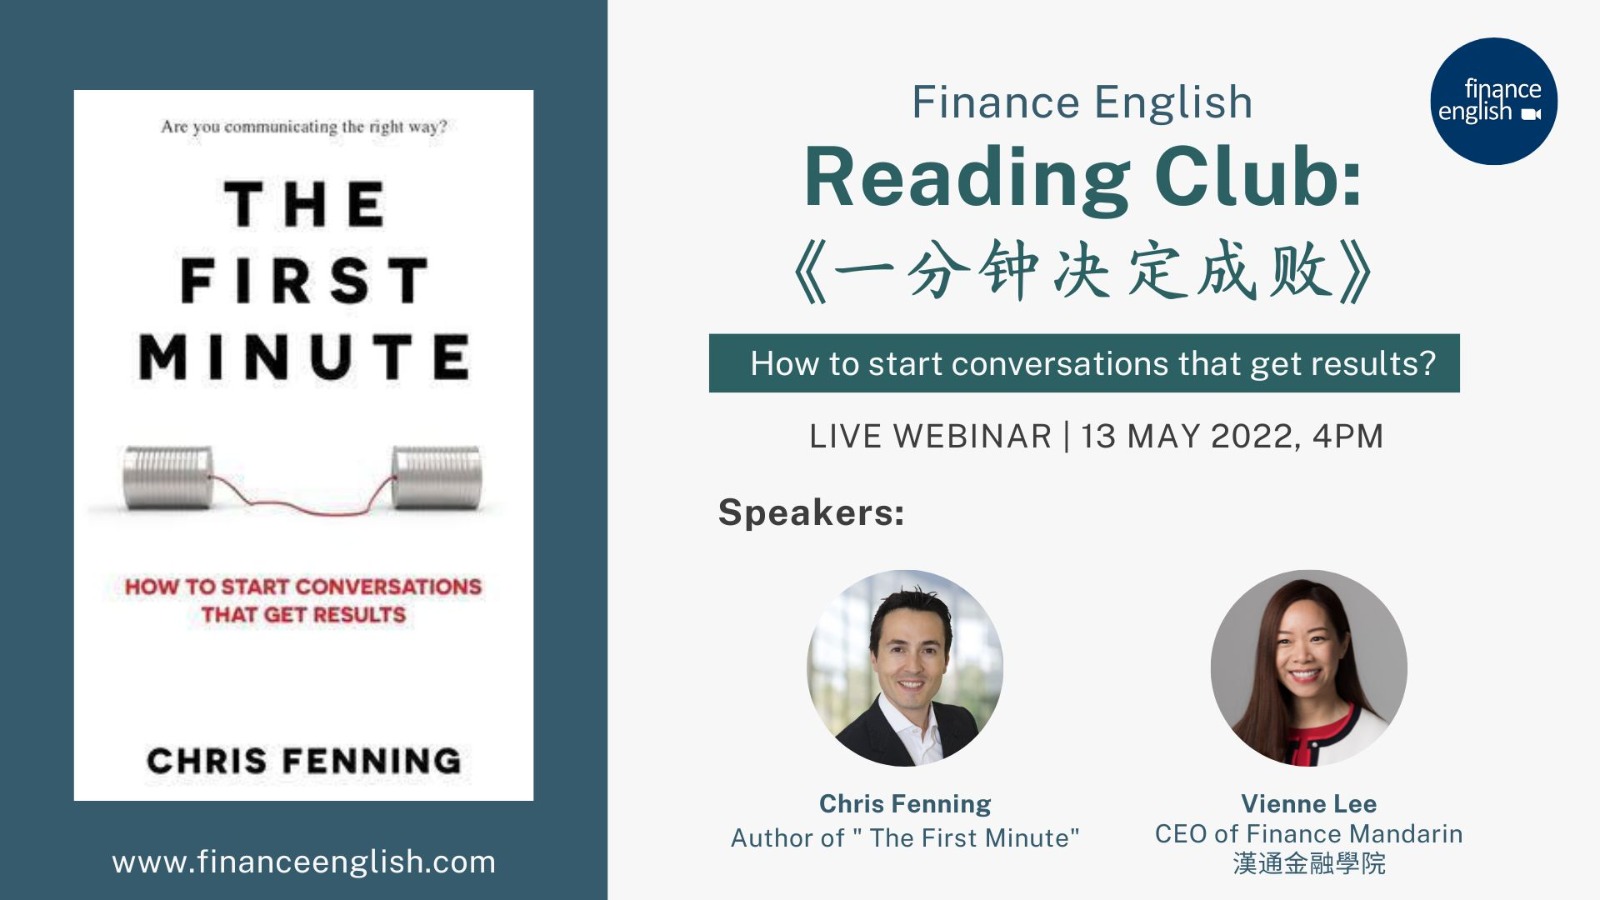 Finance Mandarin Reading Club: Chris Fenning The First Minute